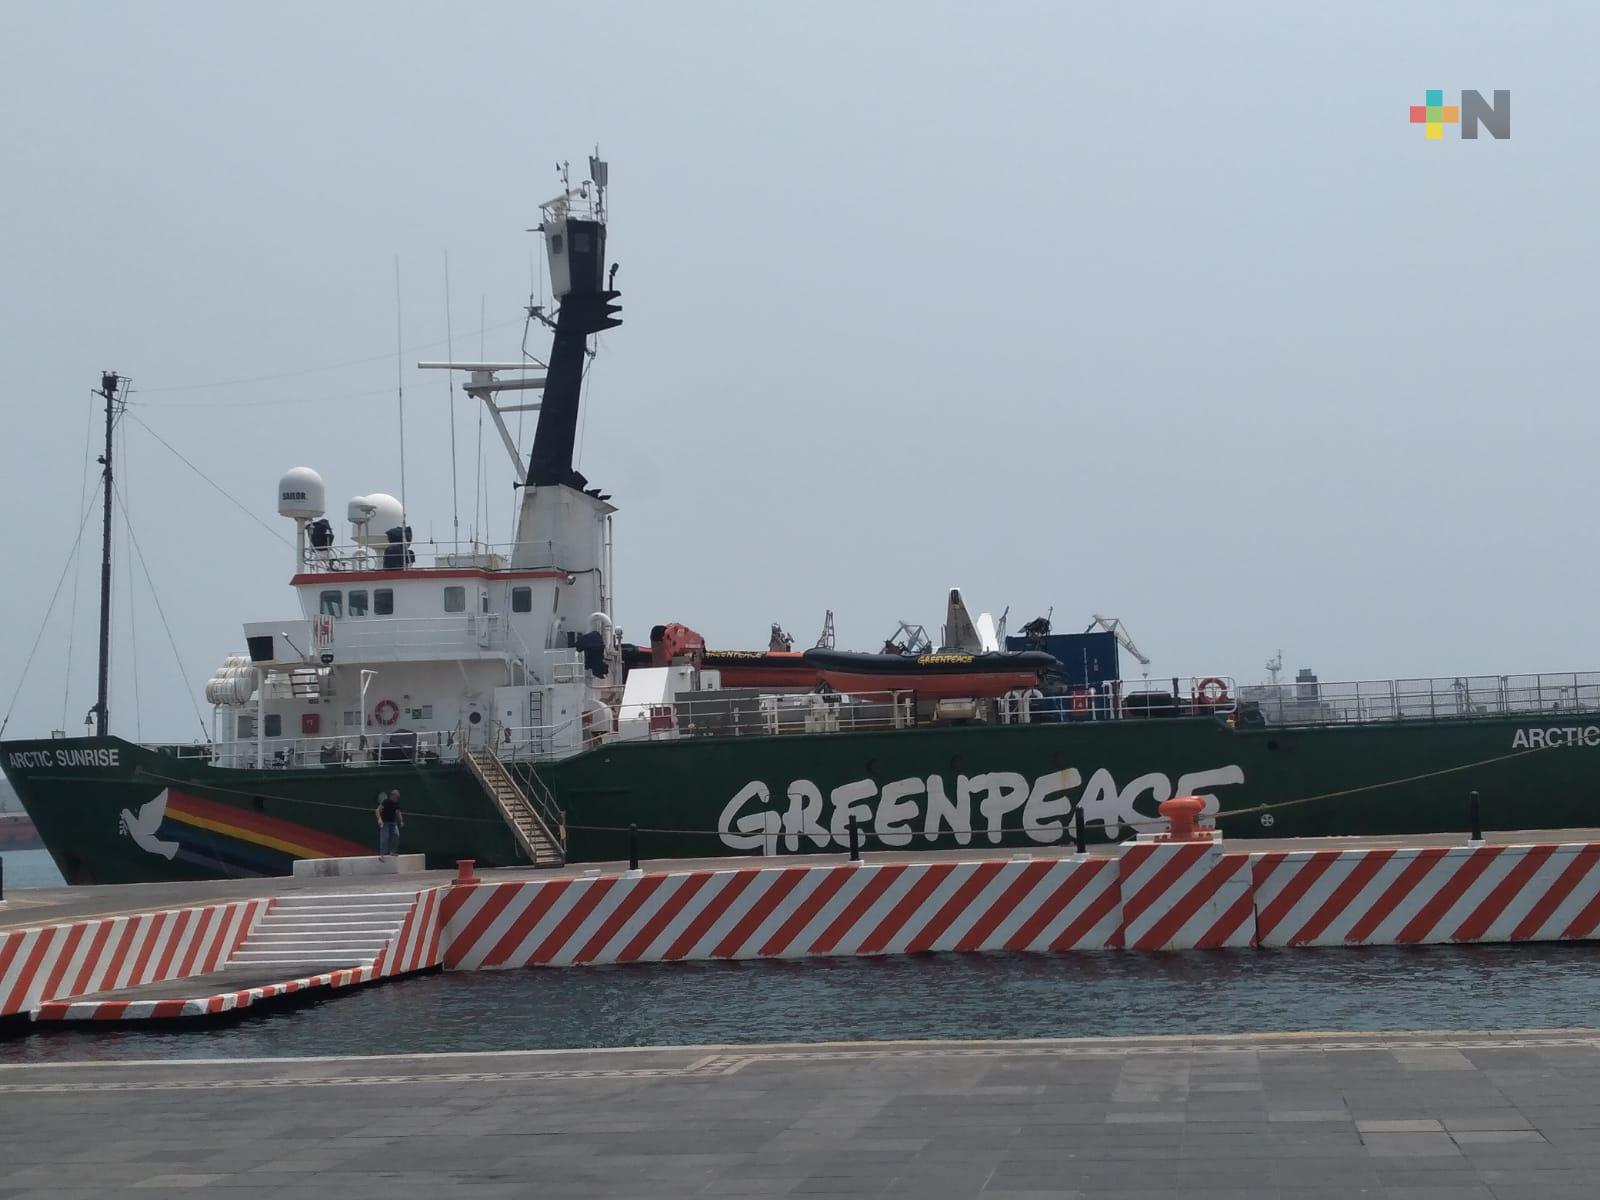 Llega buque de Greenpeace al puerto de Veracruz